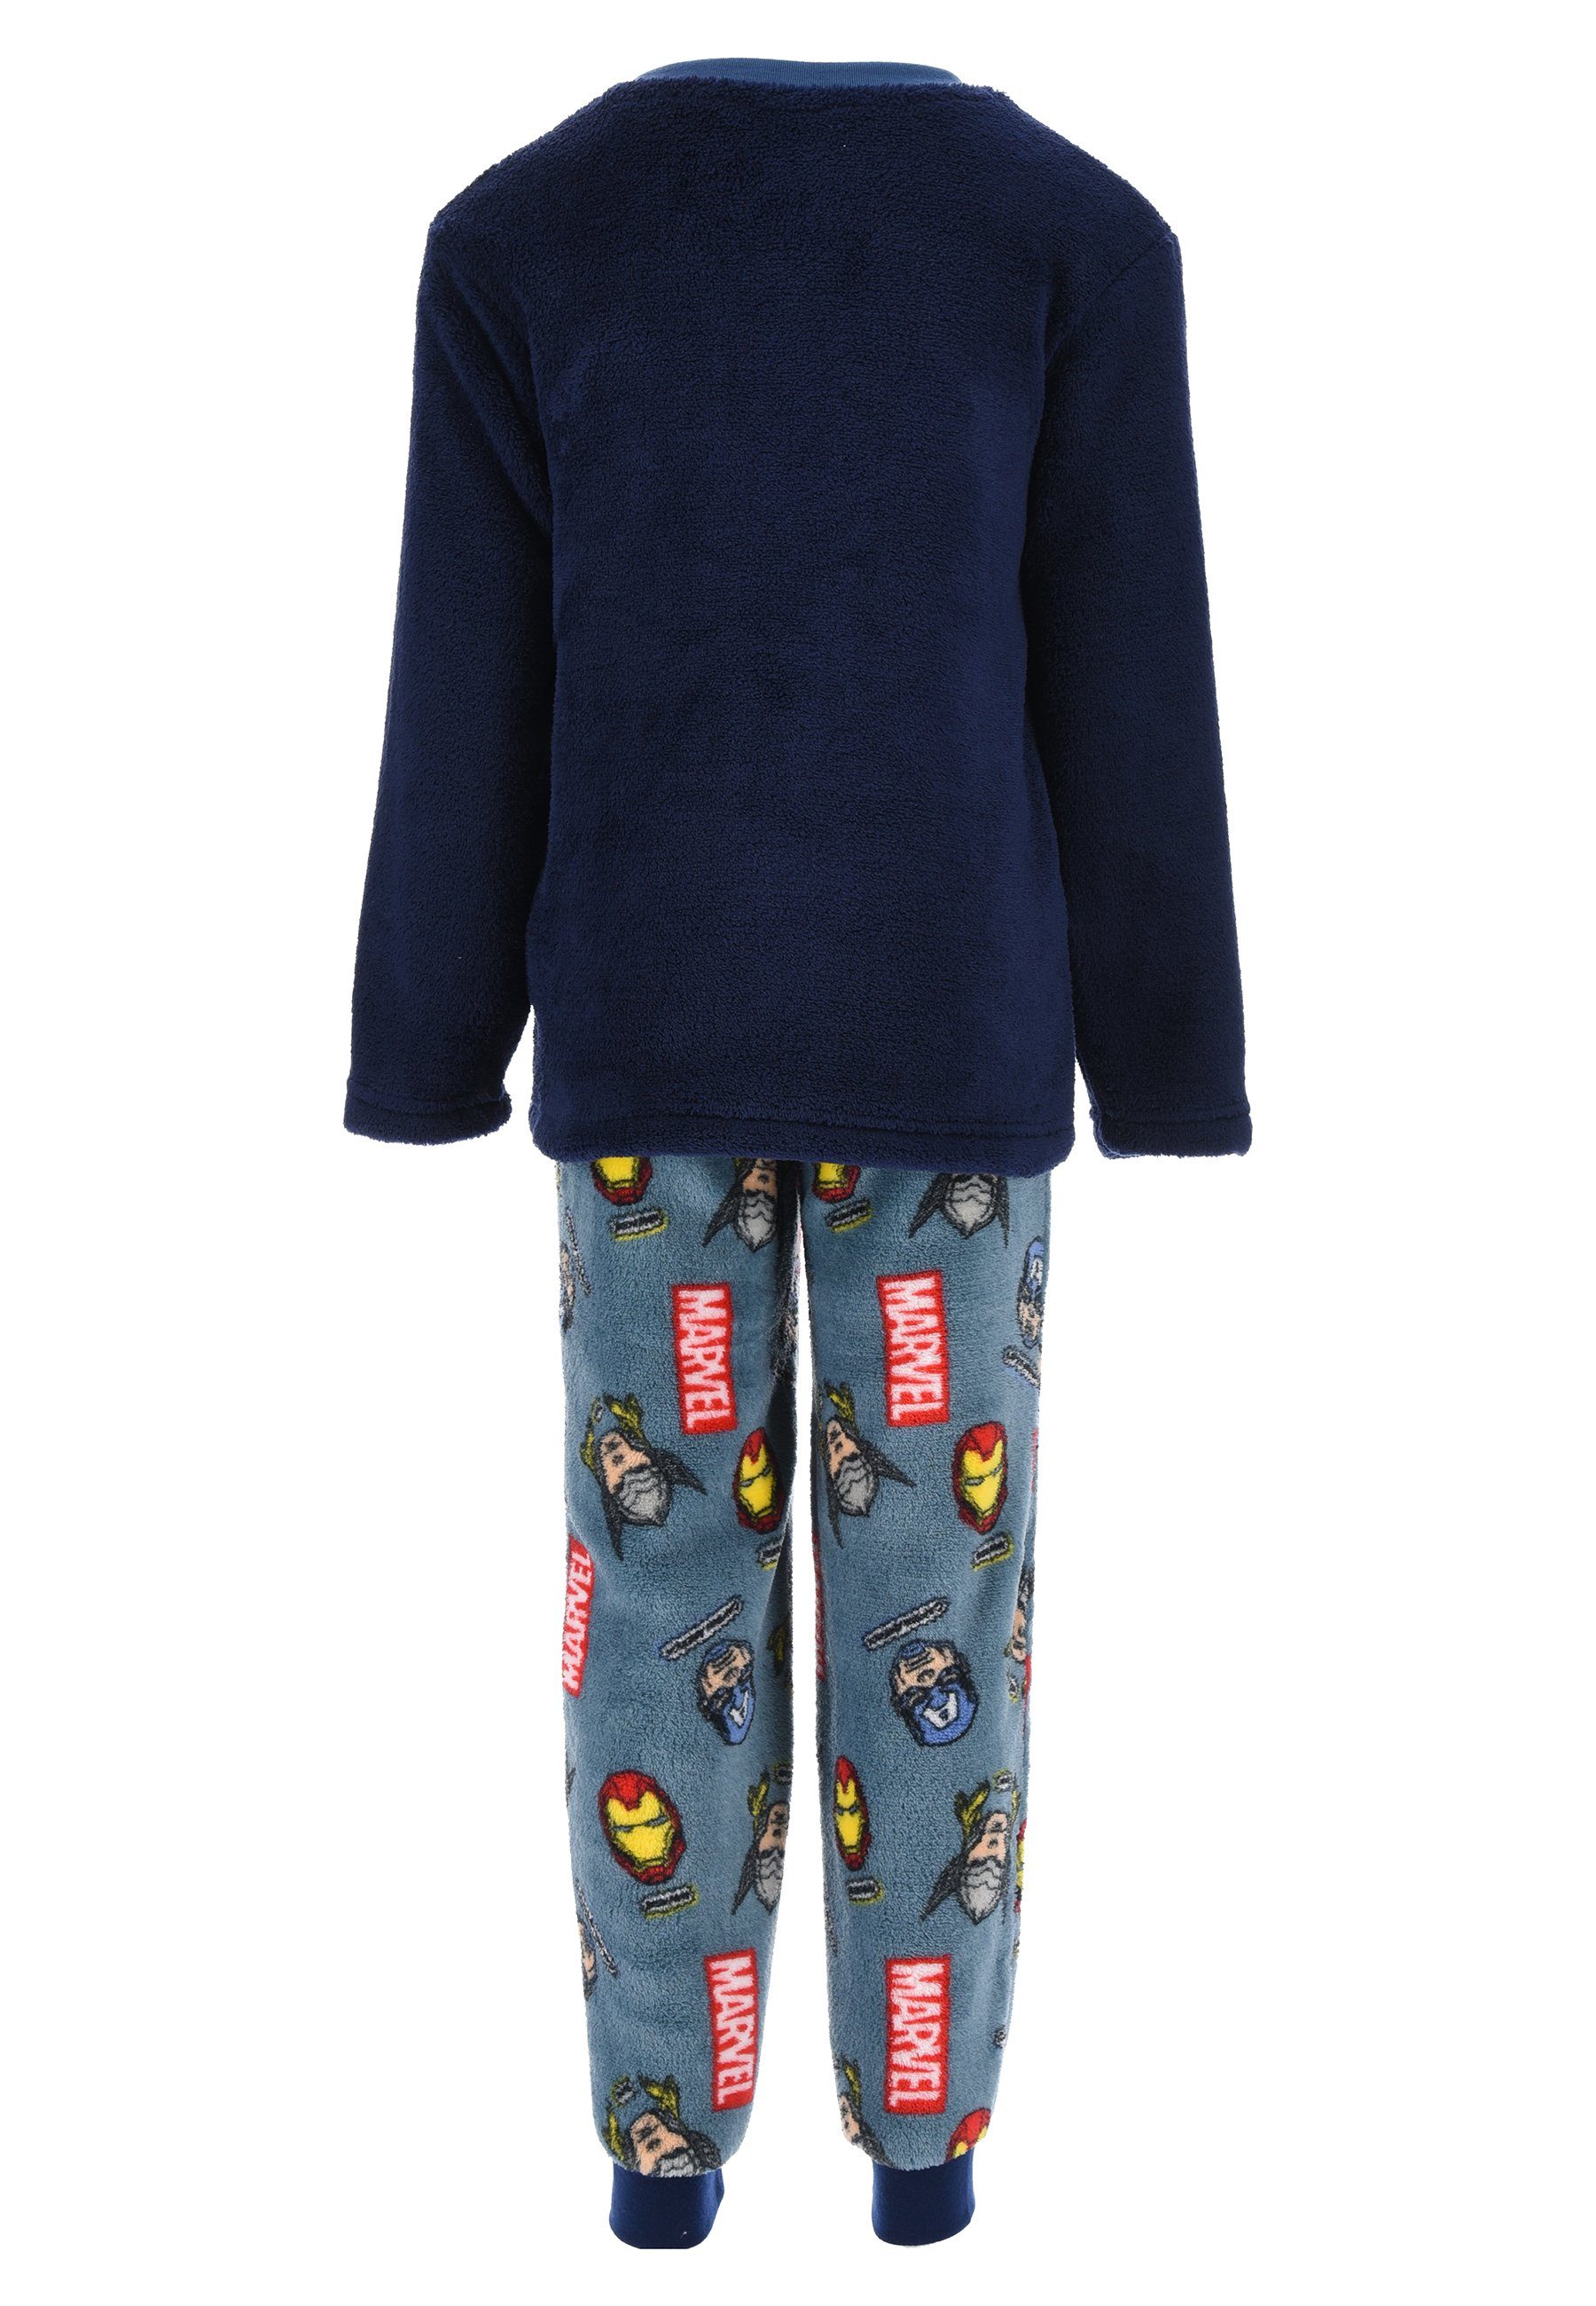 The AVENGERS Schlafanzug Ironman Hulk Fleece Kinder Pyjama Dunkel-Blau Jungen Nachtwäsche Thor